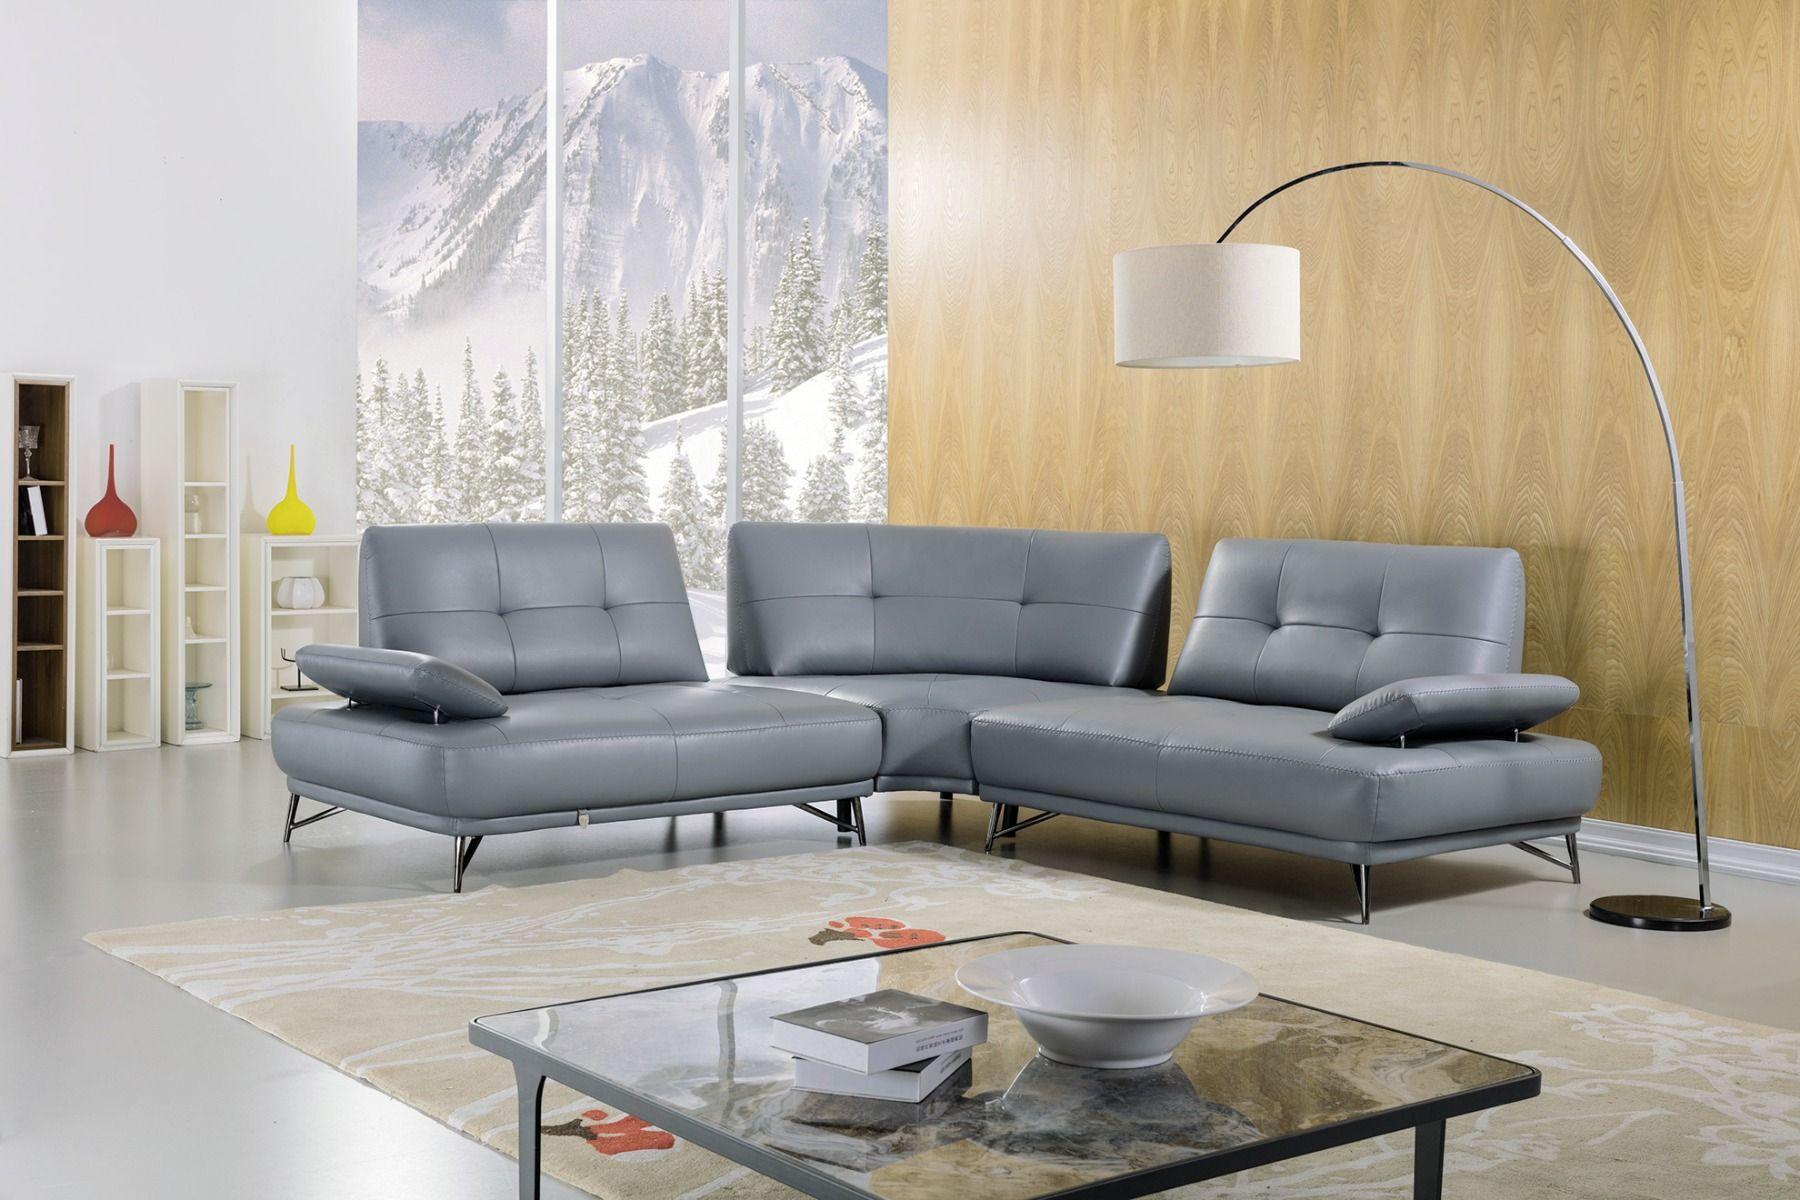 

    
American Eagle Furniture EK-L8005M-BGY Sectional Sofa Cobalt blue EK-L8005M-BGY
